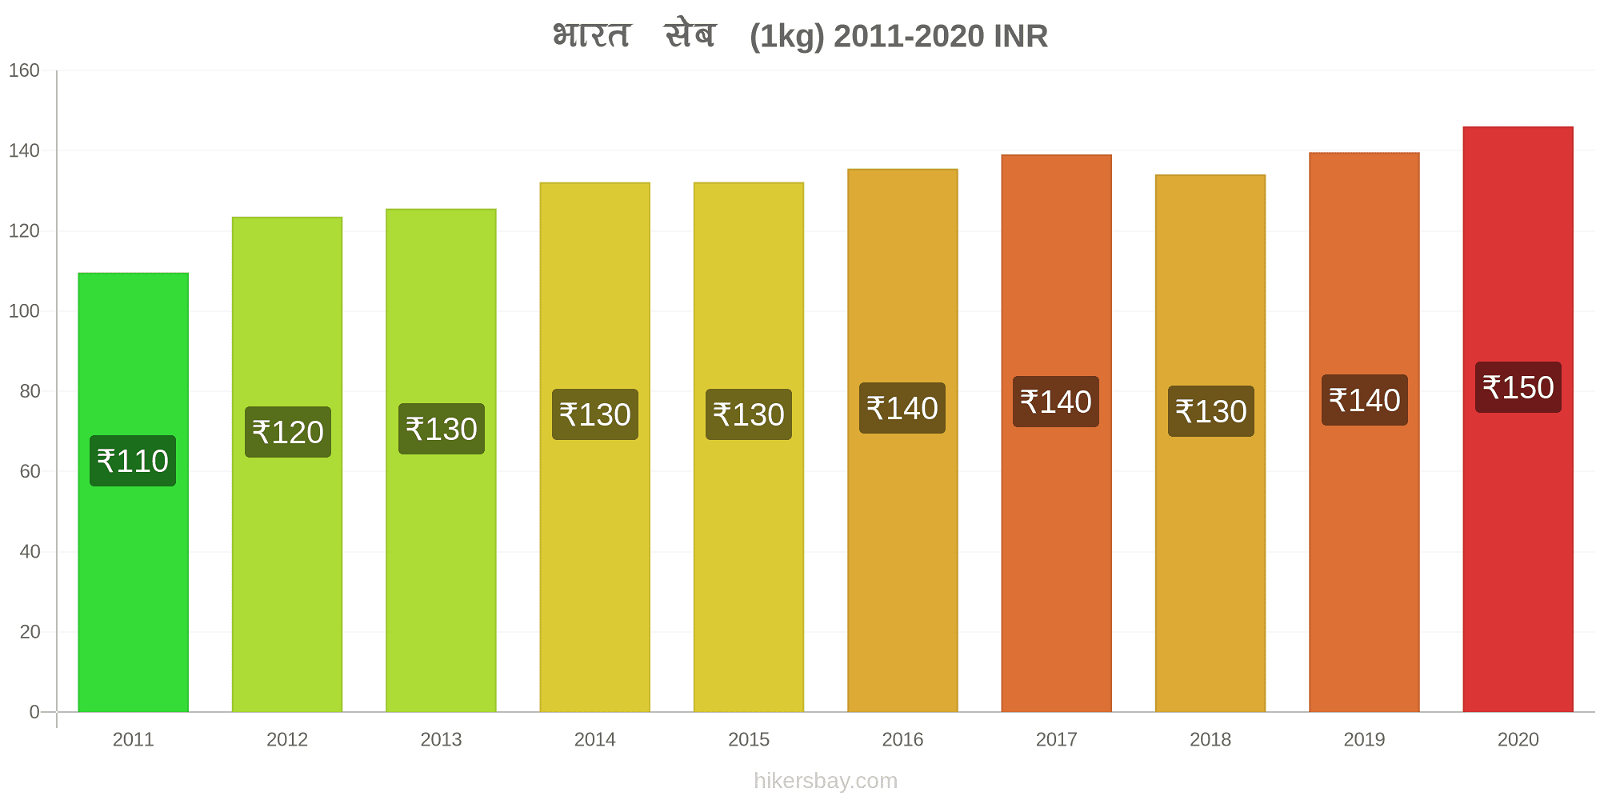 भारत मूल्य परिवर्तन सेब (1kg) hikersbay.com